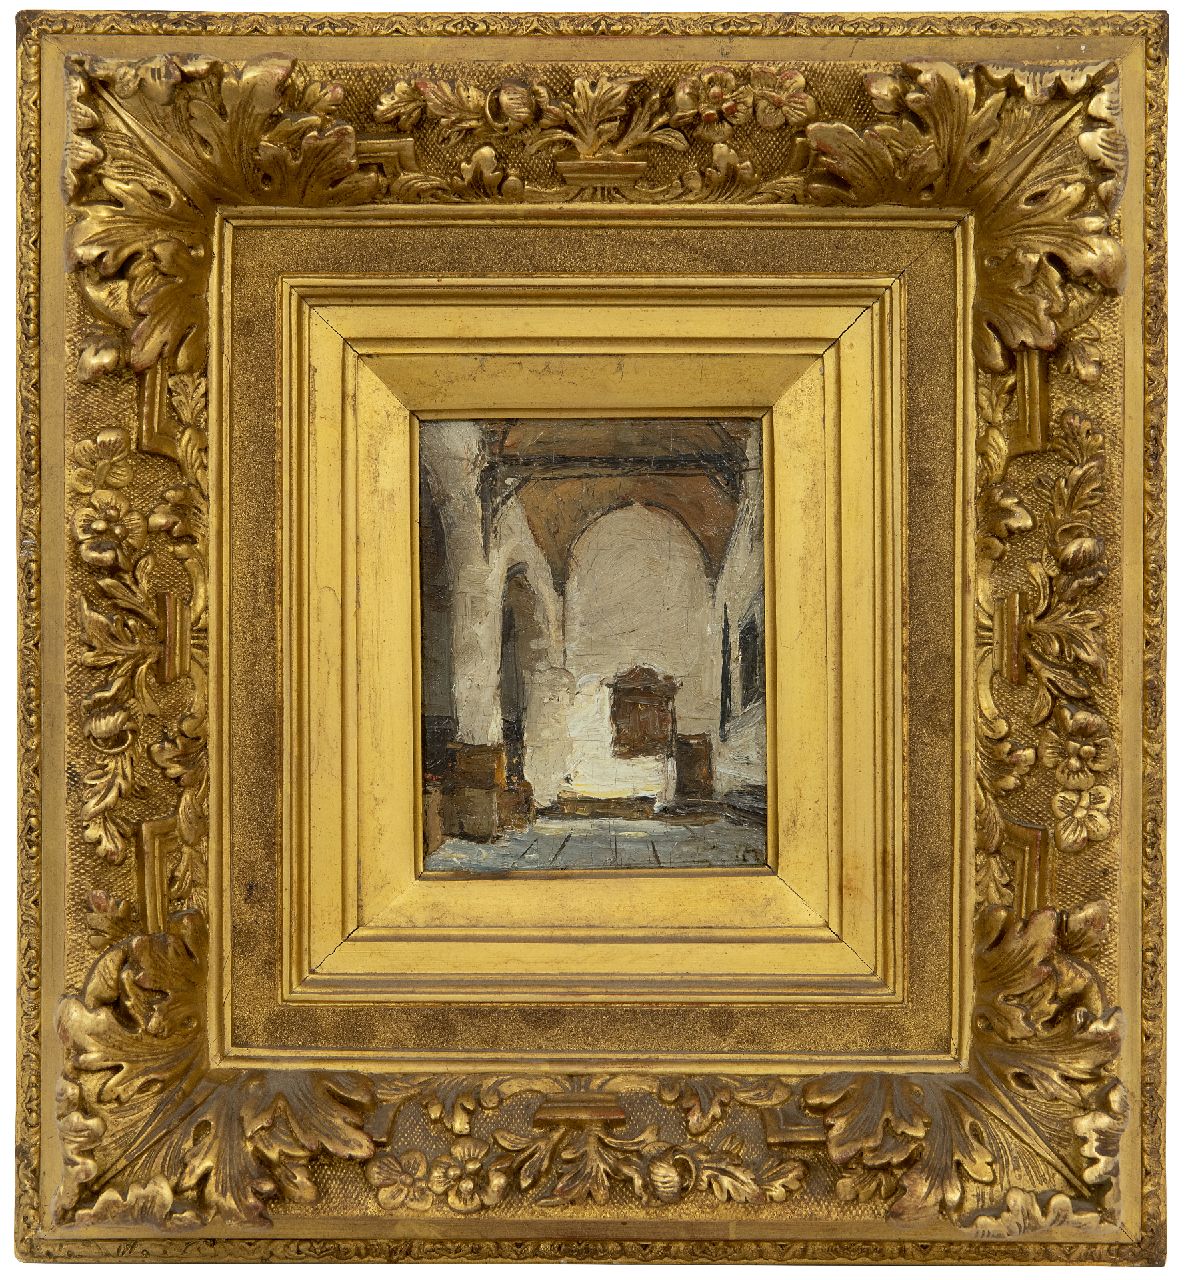 Bosboom J.  | Johannes Bosboom, Church interior, oil on panel 12.0 x 9.1 cm, signed l.r. with initials